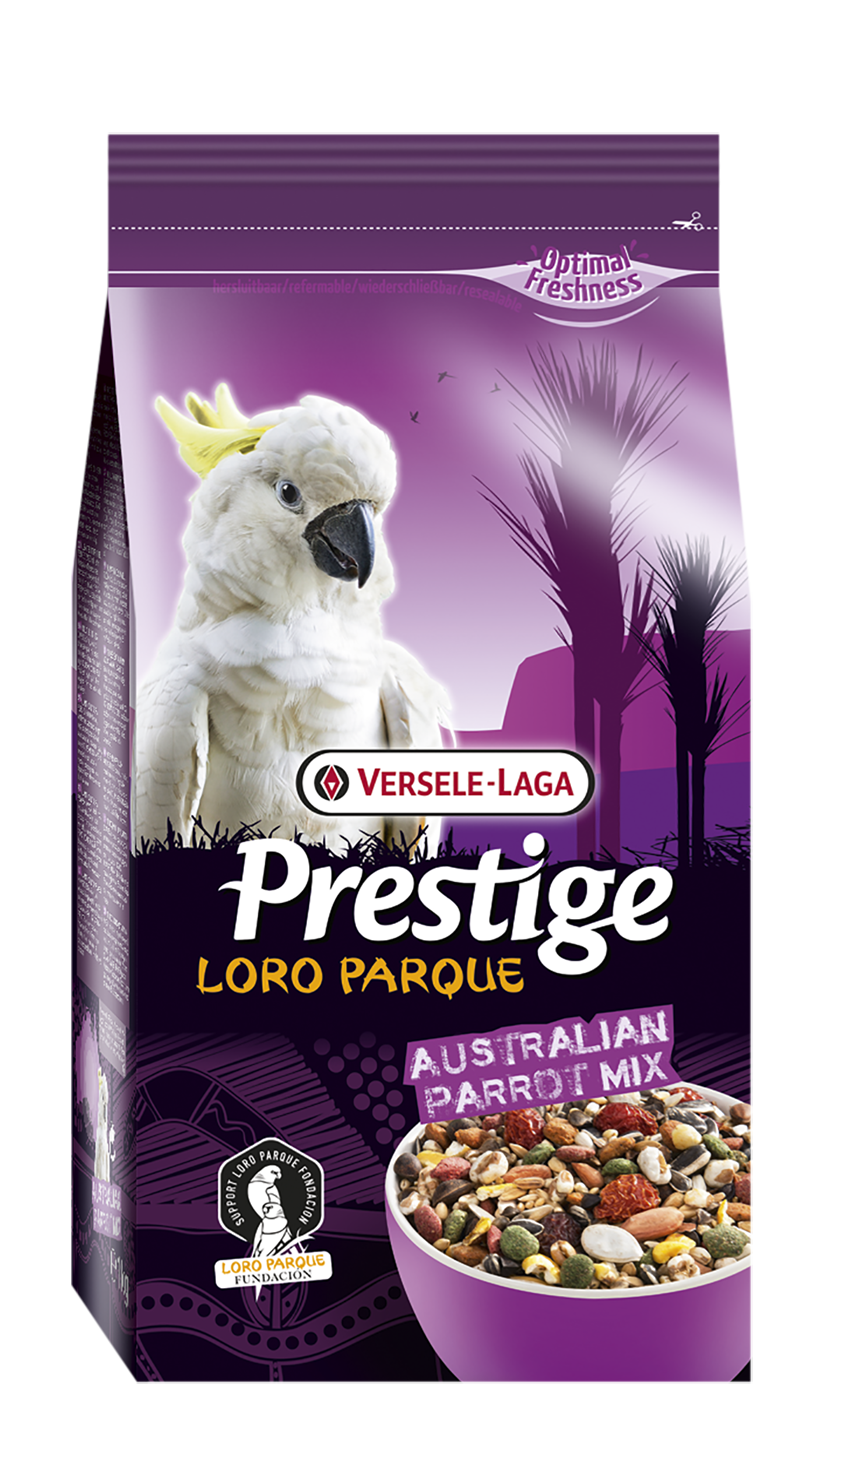 Versele-Laga Prestige Loro Parque Australian Parrot Mix 1 kg